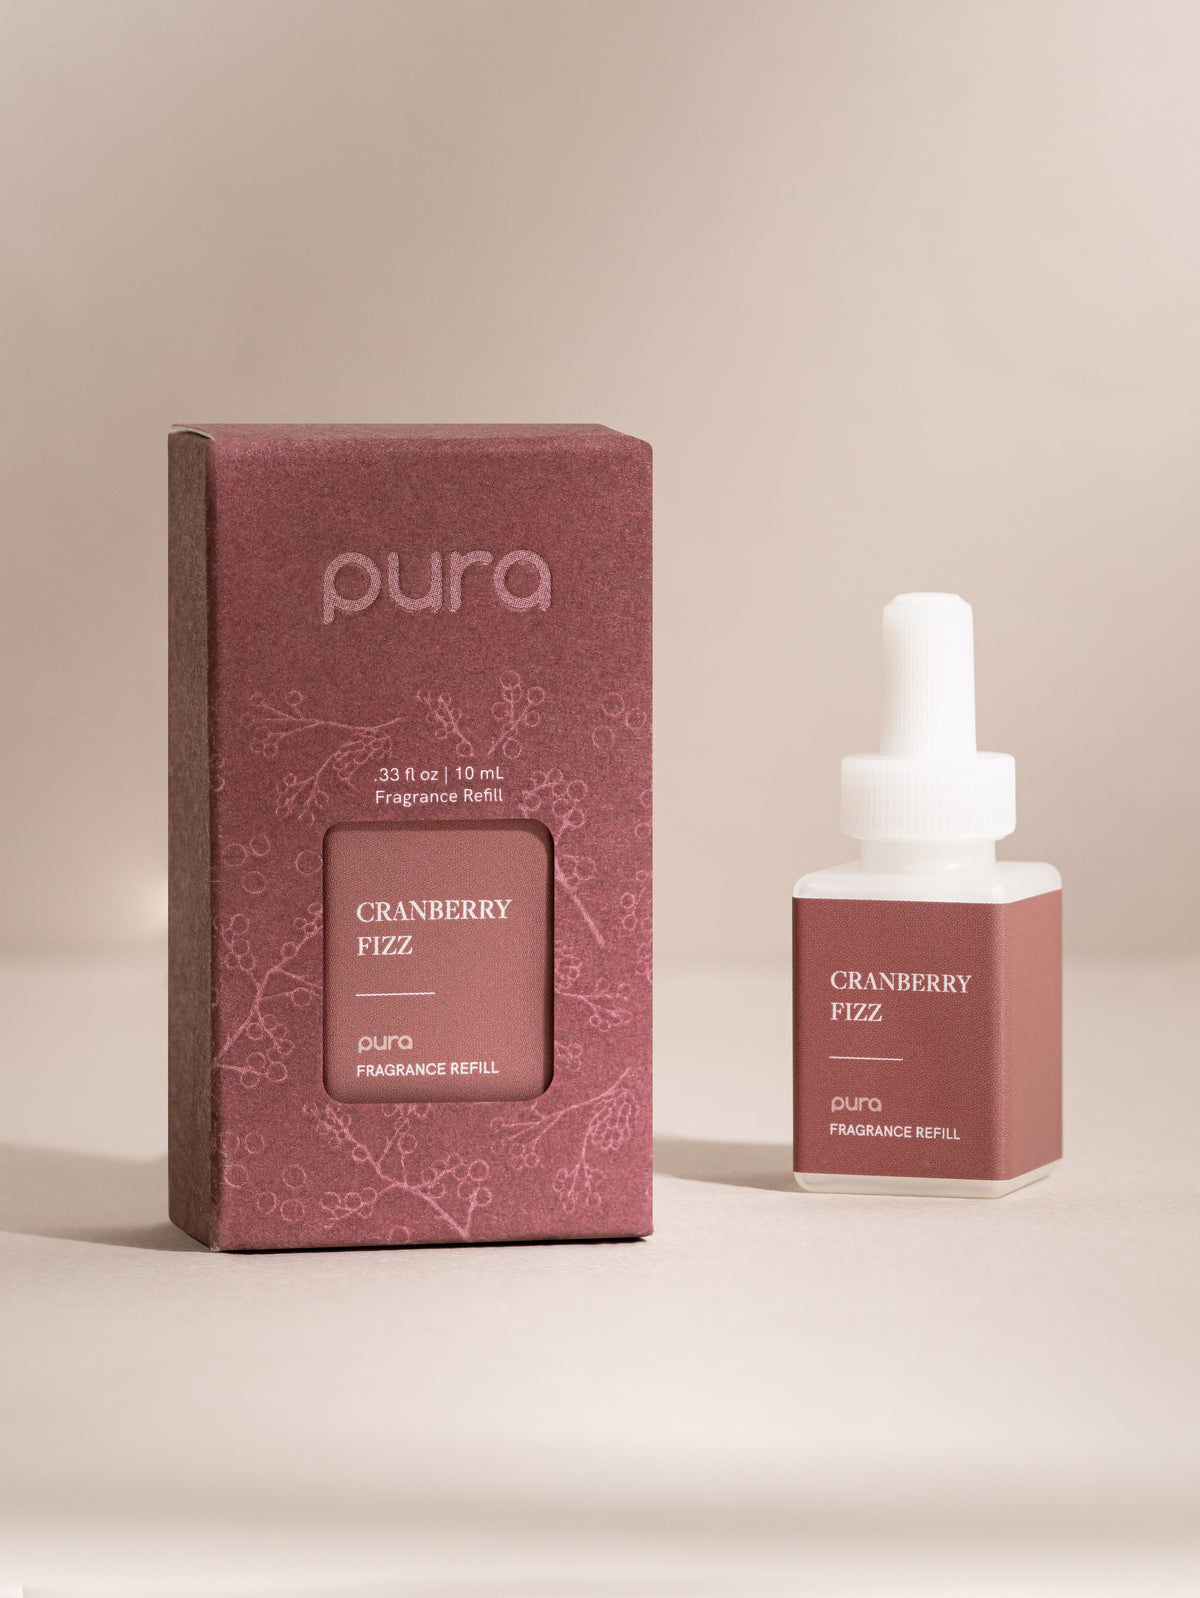 Cranberry Fizz Pura Smart Vial Fragrance Refill by Pura